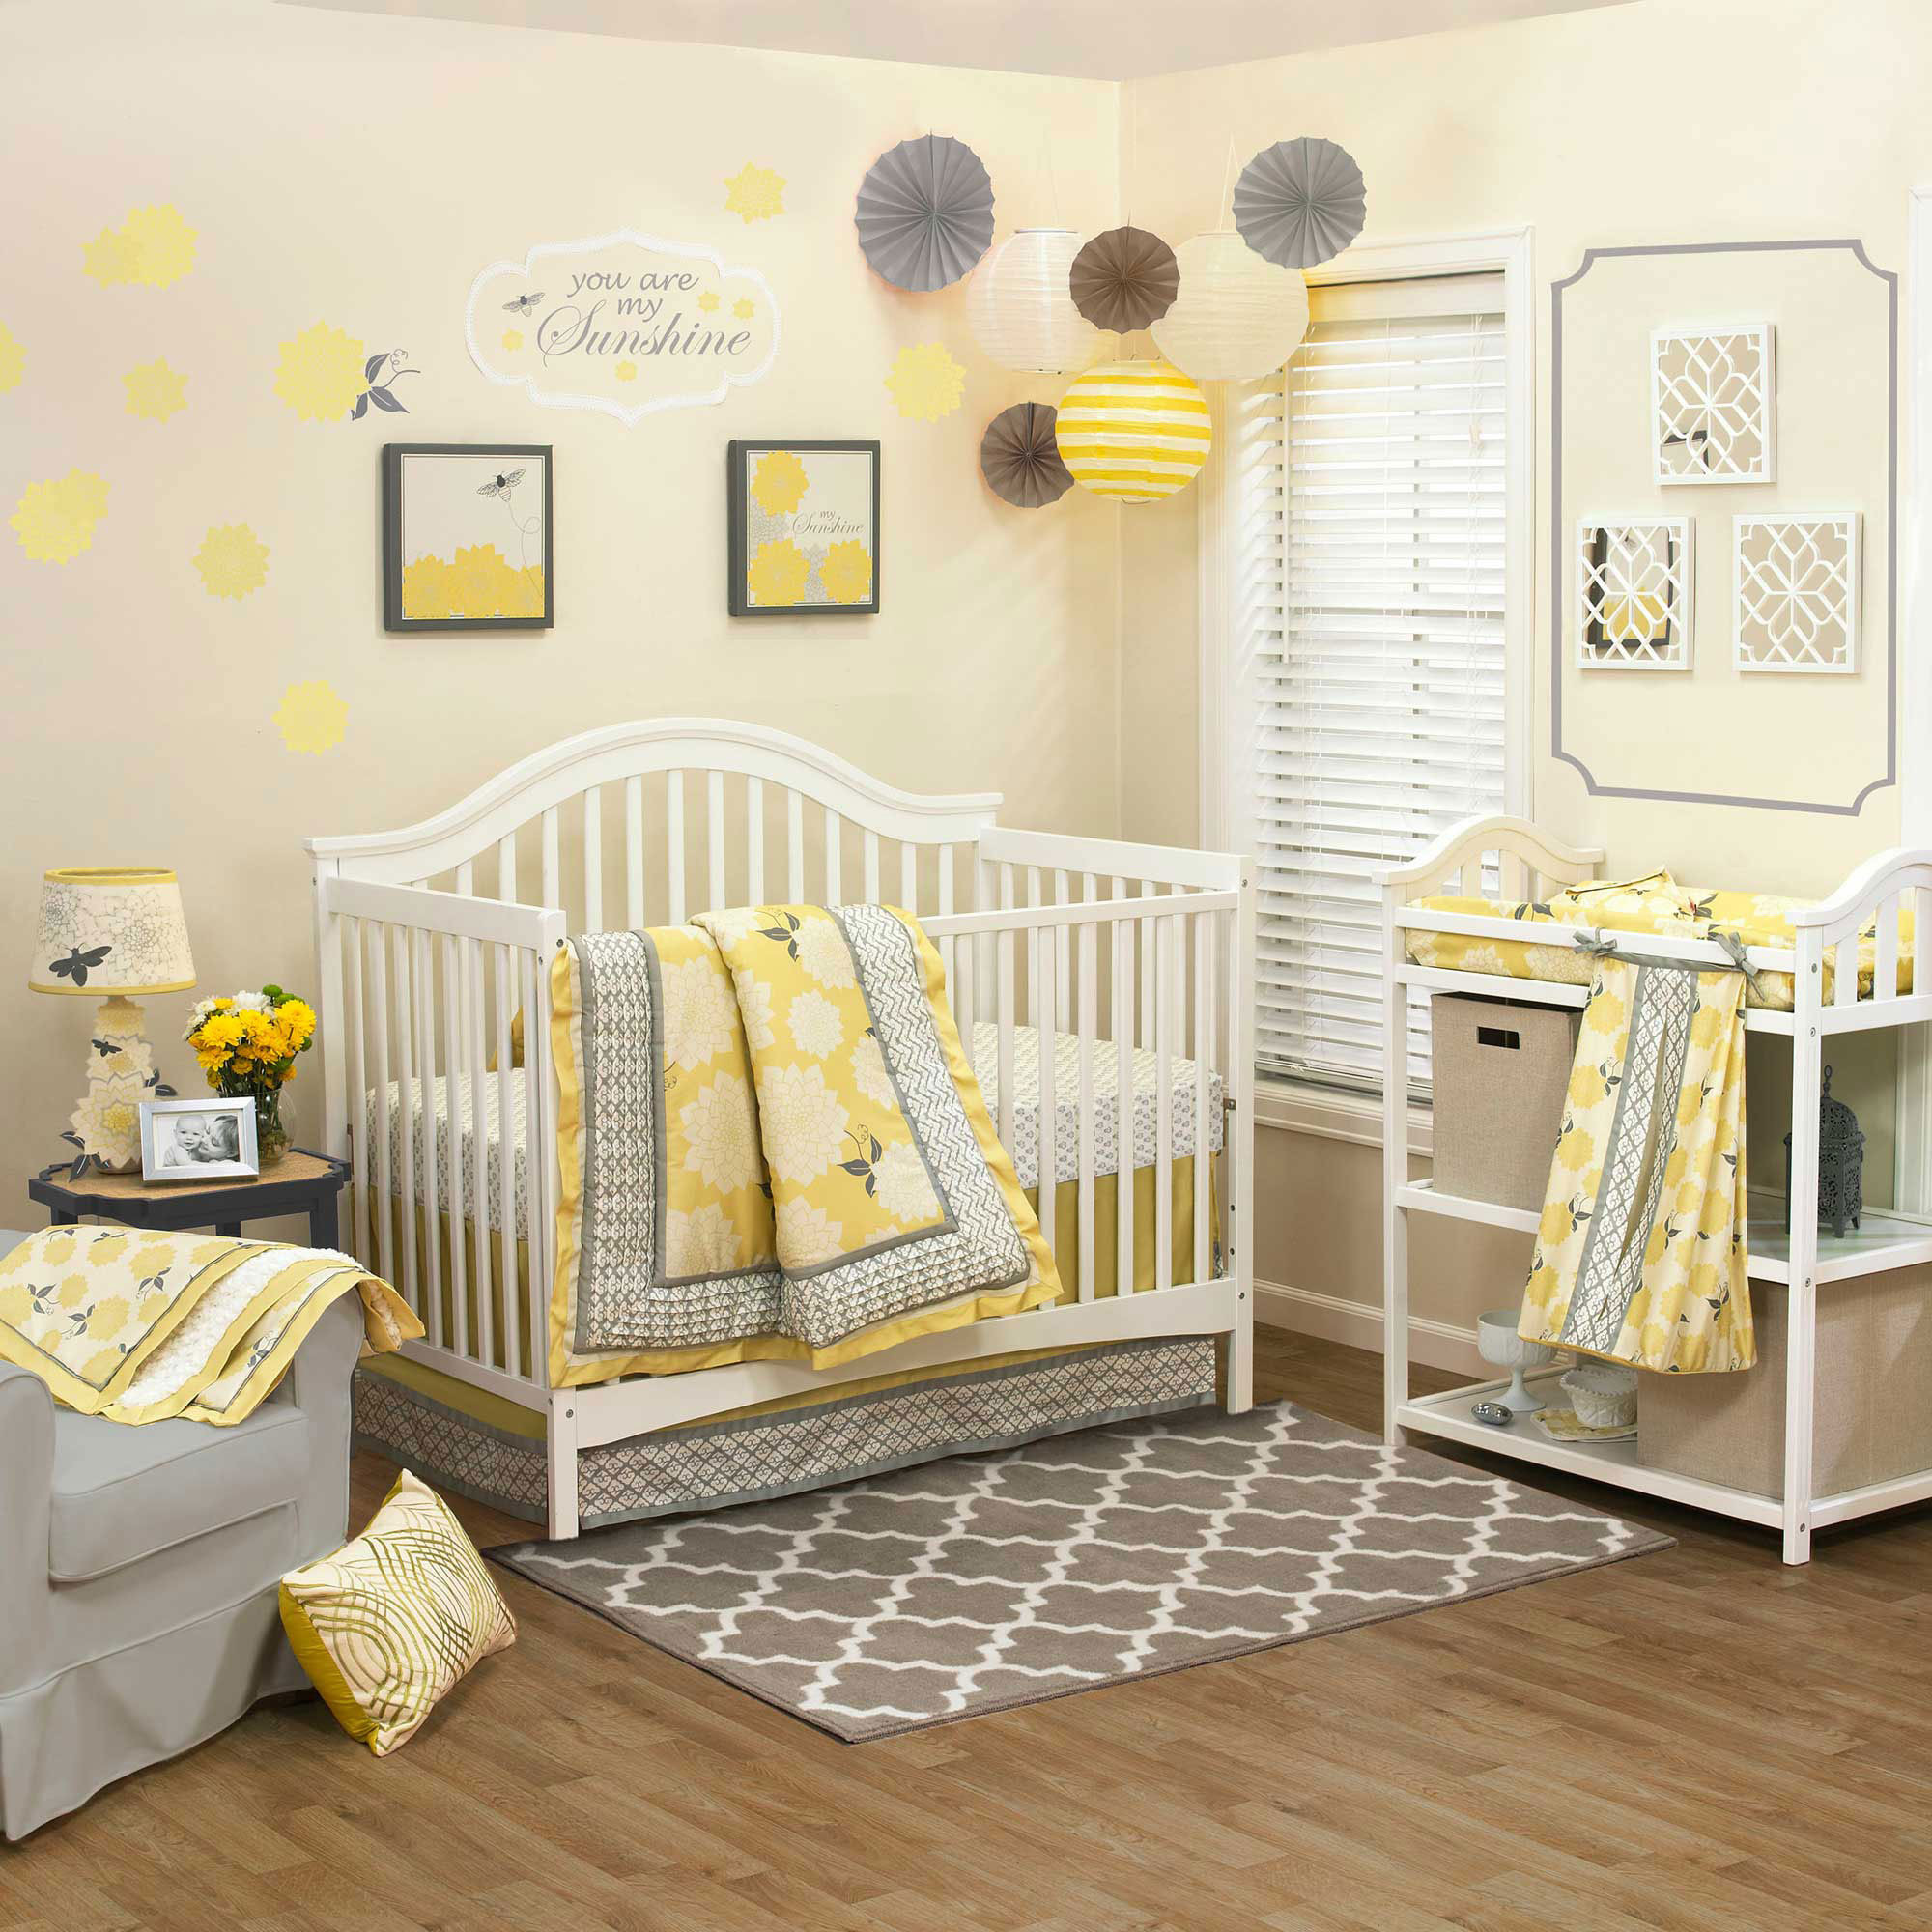 Newborn Baby Girl Room Decorations
 Baby Girl Nursery Ideas 10 Pretty Examples Decorating Room